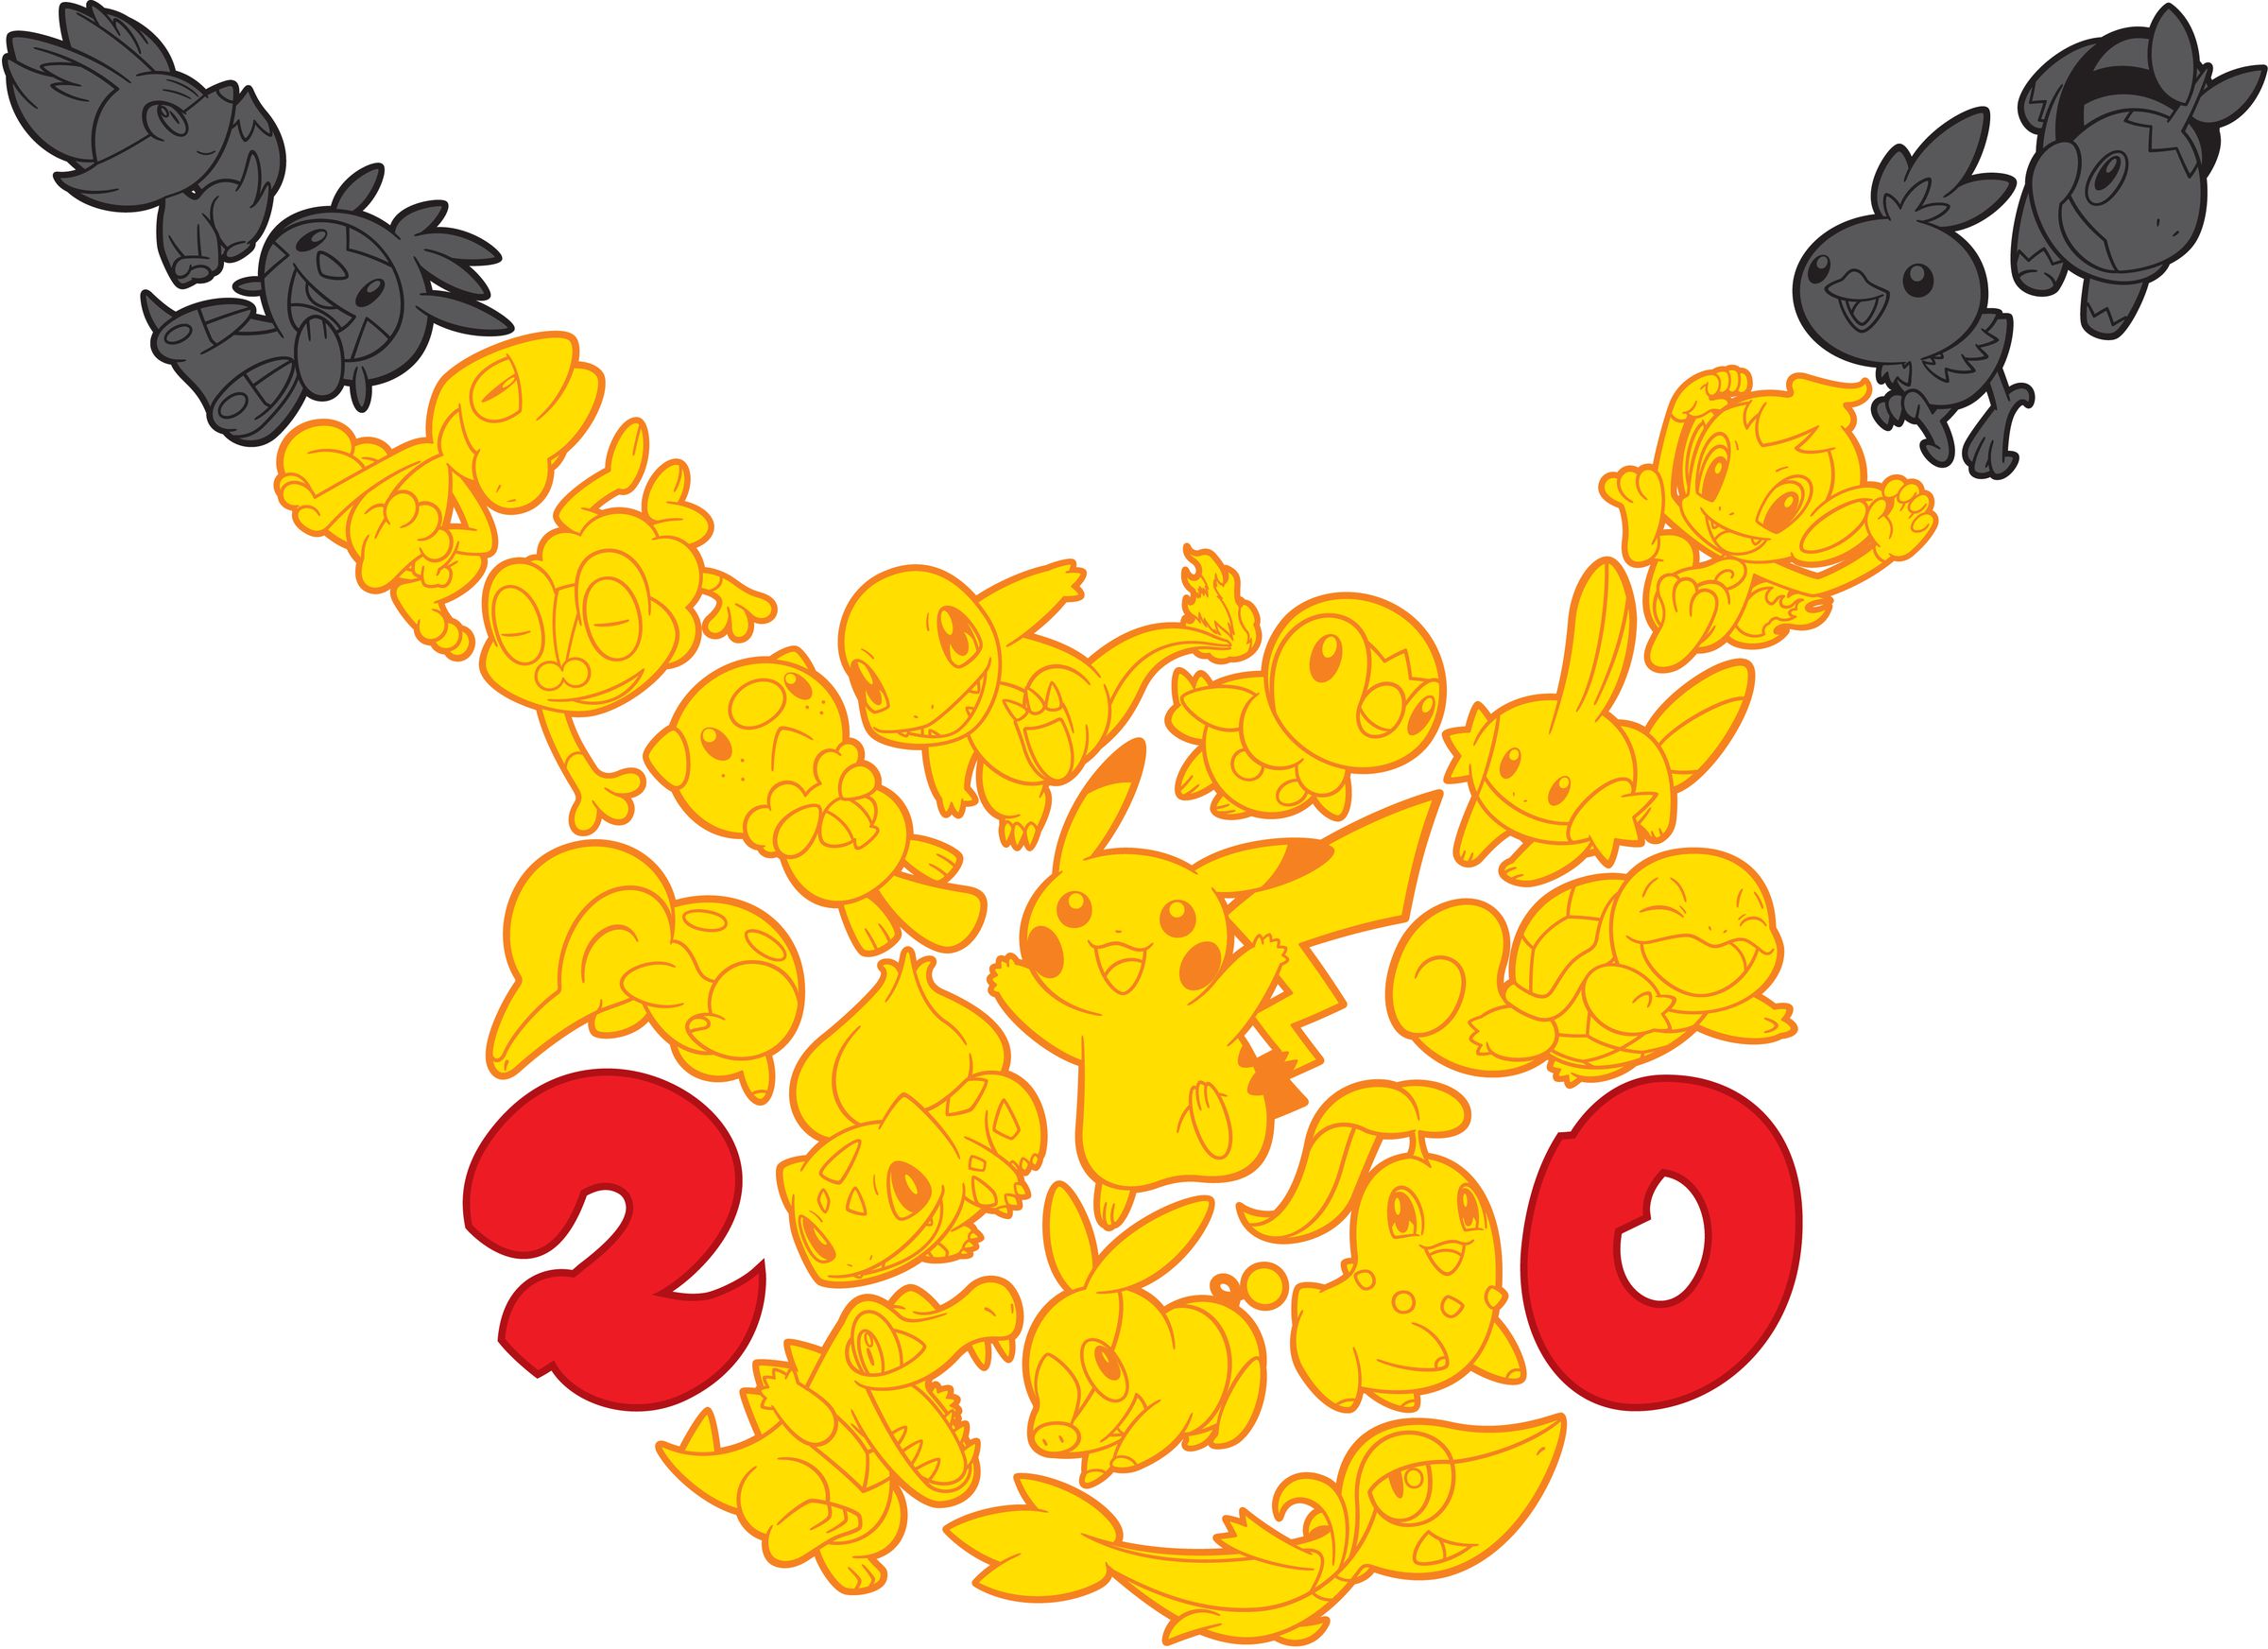 Pokemon 20th anniversary graphic